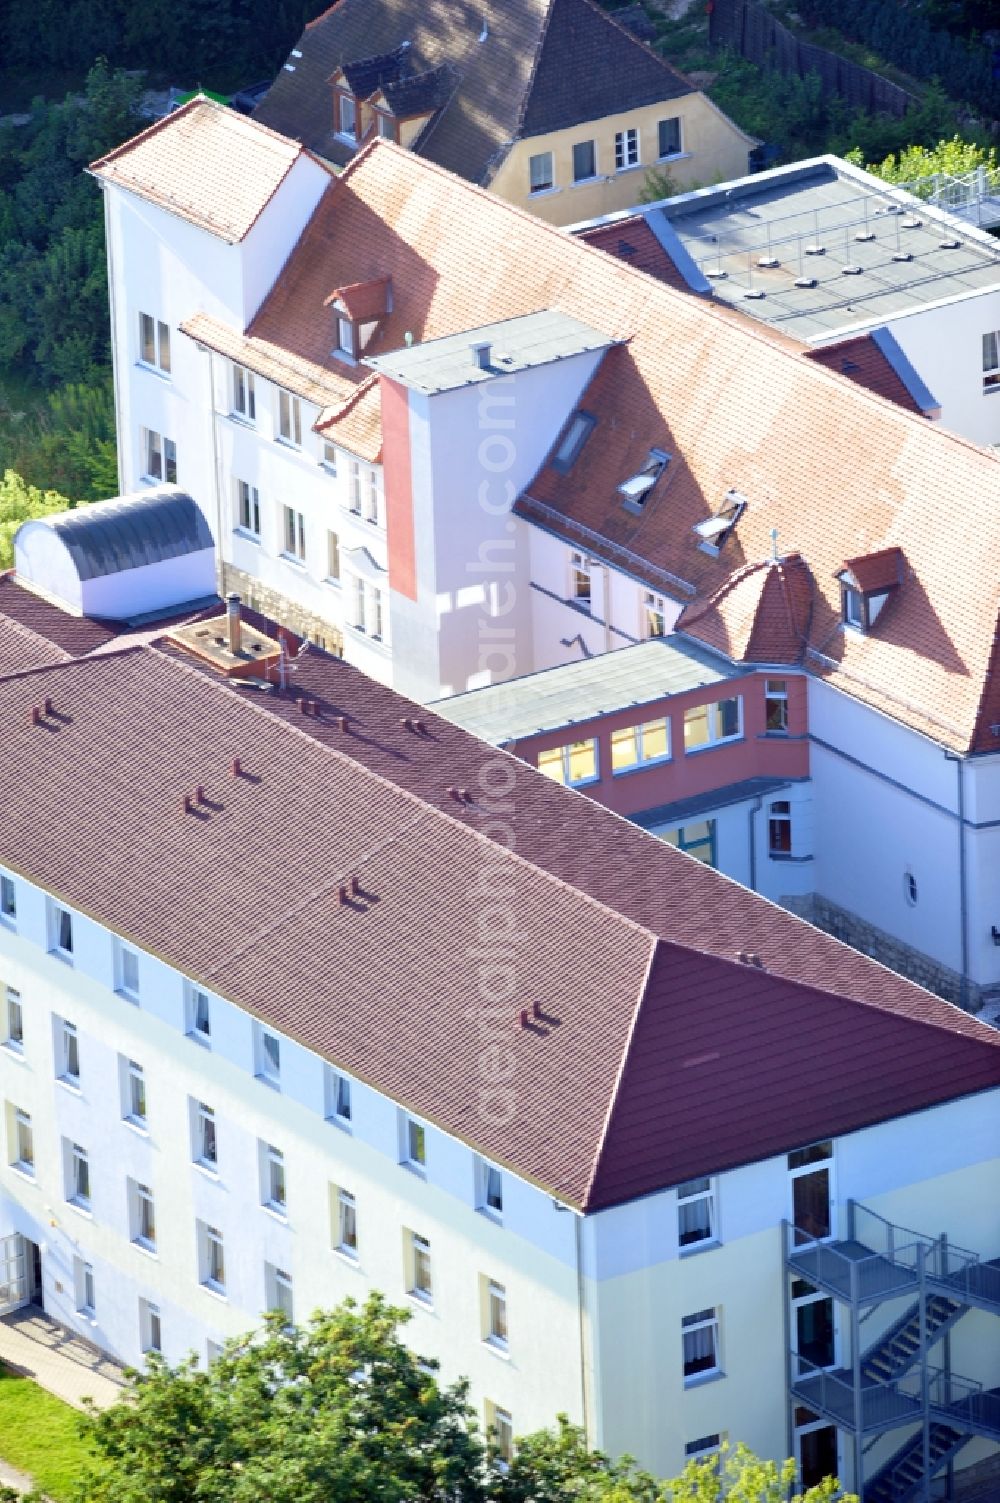 Aerial photograph Laucha an der Unstrut - View of DRK - Deutsches Rotes Kreuz care centre Laucha in Saxony-Anhalt